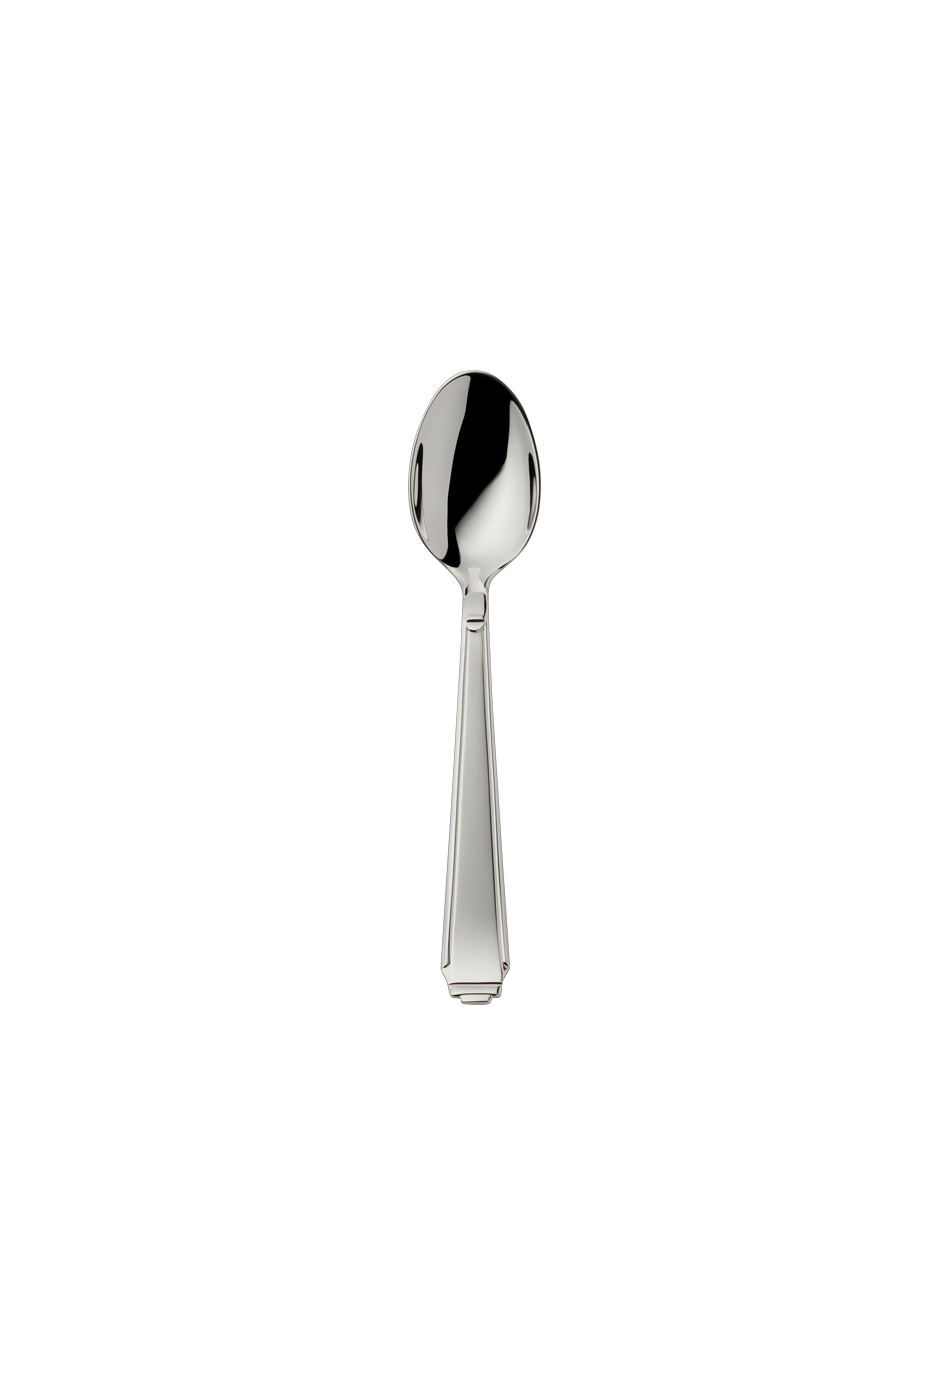 Art Deco Coffee Spoon 13,0 Cm (150g massive silverplated)